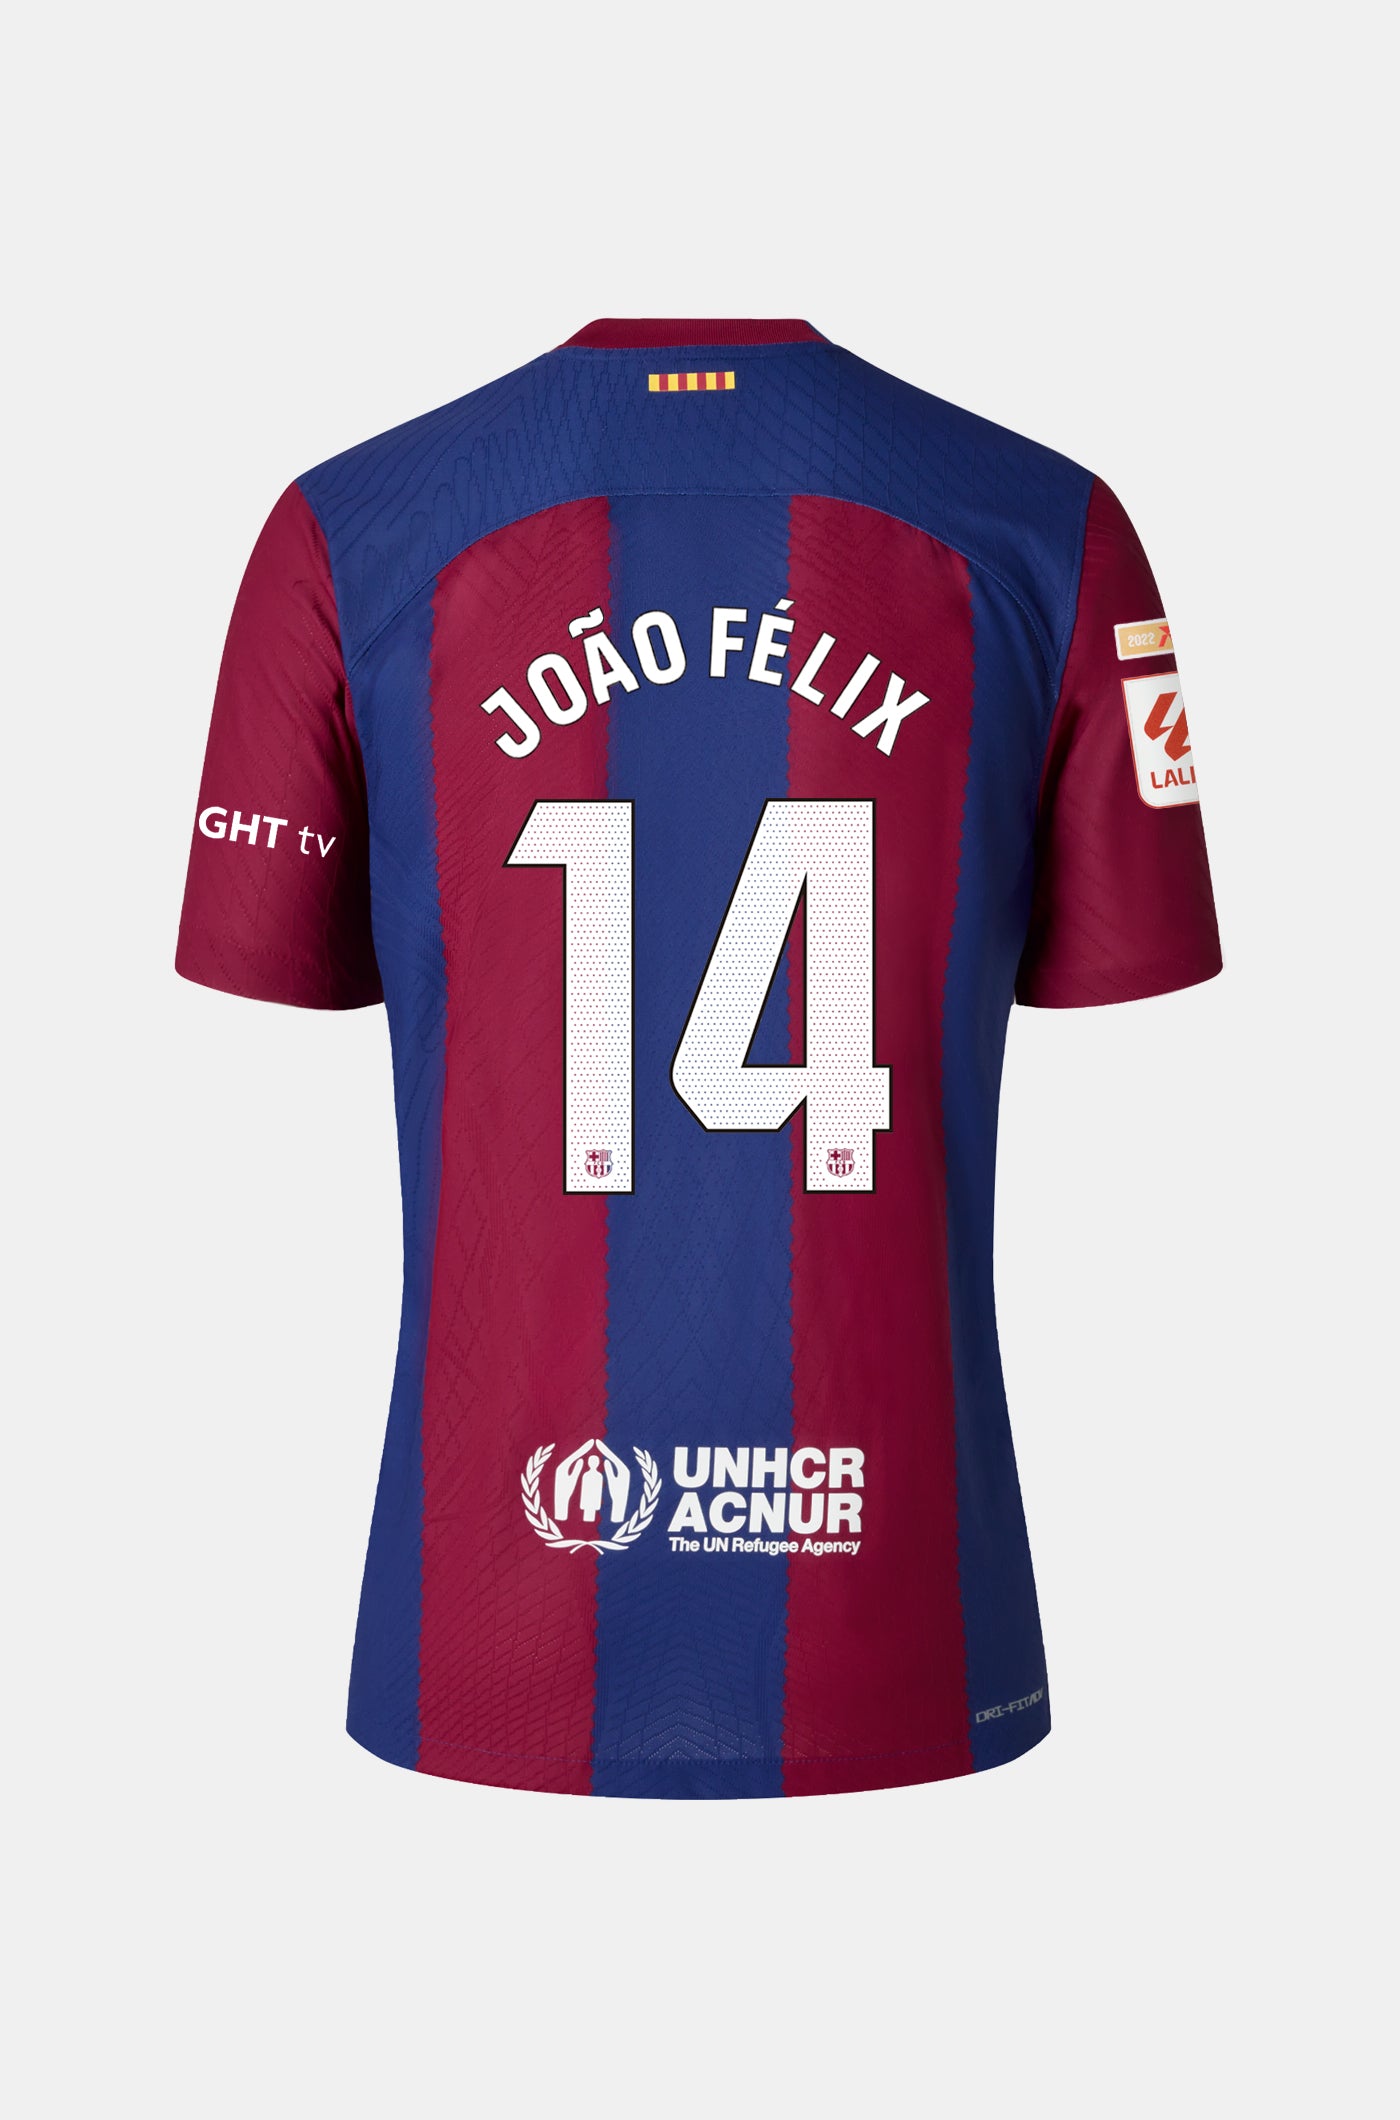 LFP FC Barcelona home shirt 23/24 Player's Edition - JOÃO FÉLIX